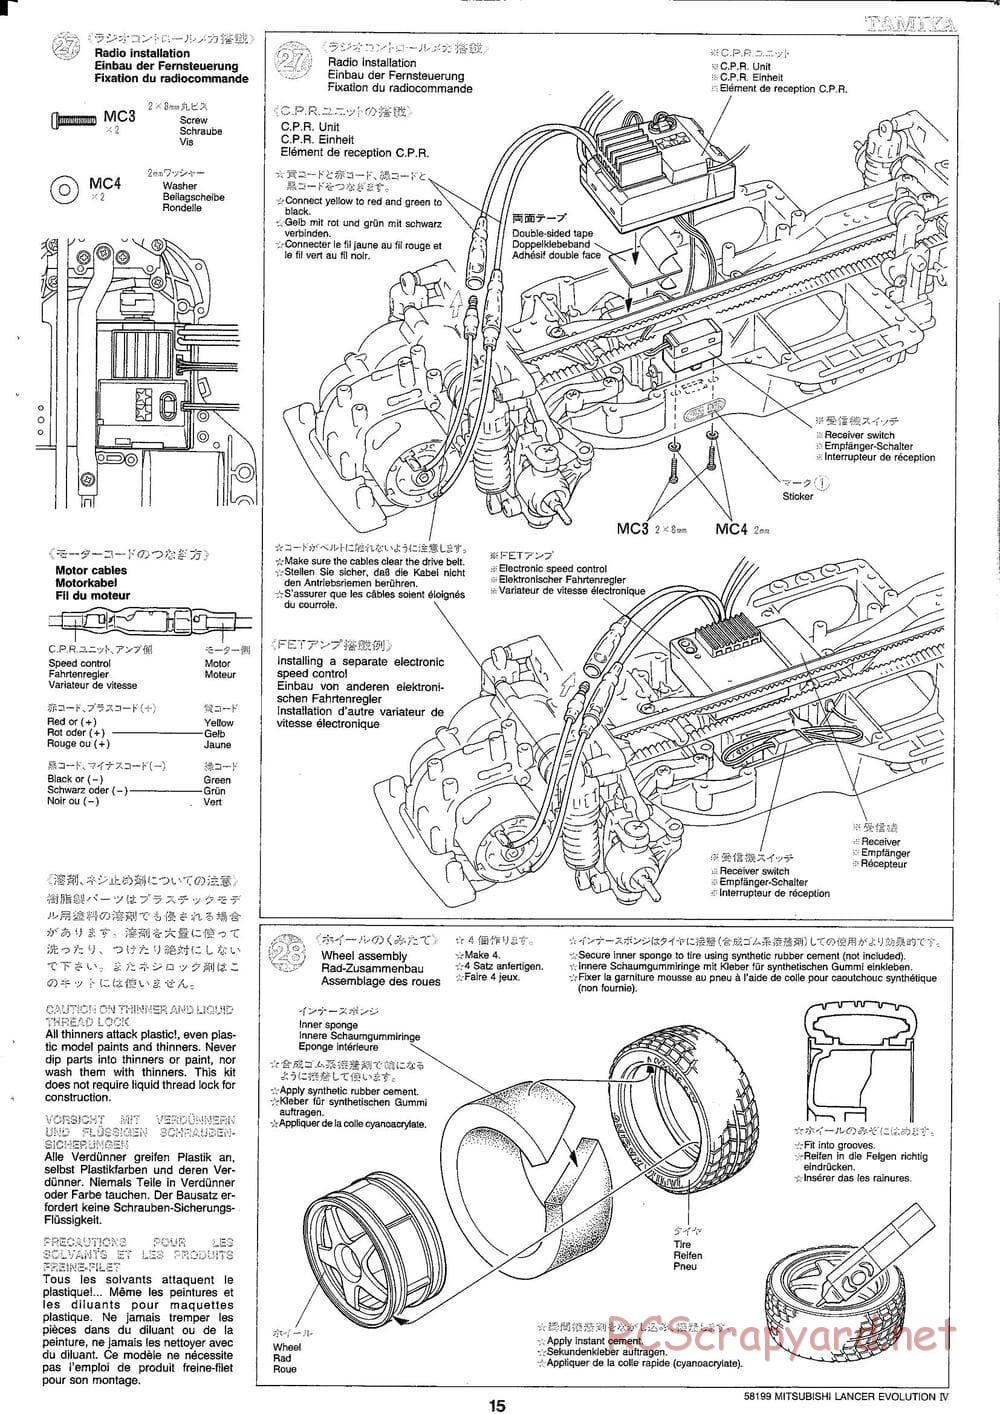 Tamiya - Mitsubishi Lancer Evolution IV - TA-03F Chassis - Manual - Page 15